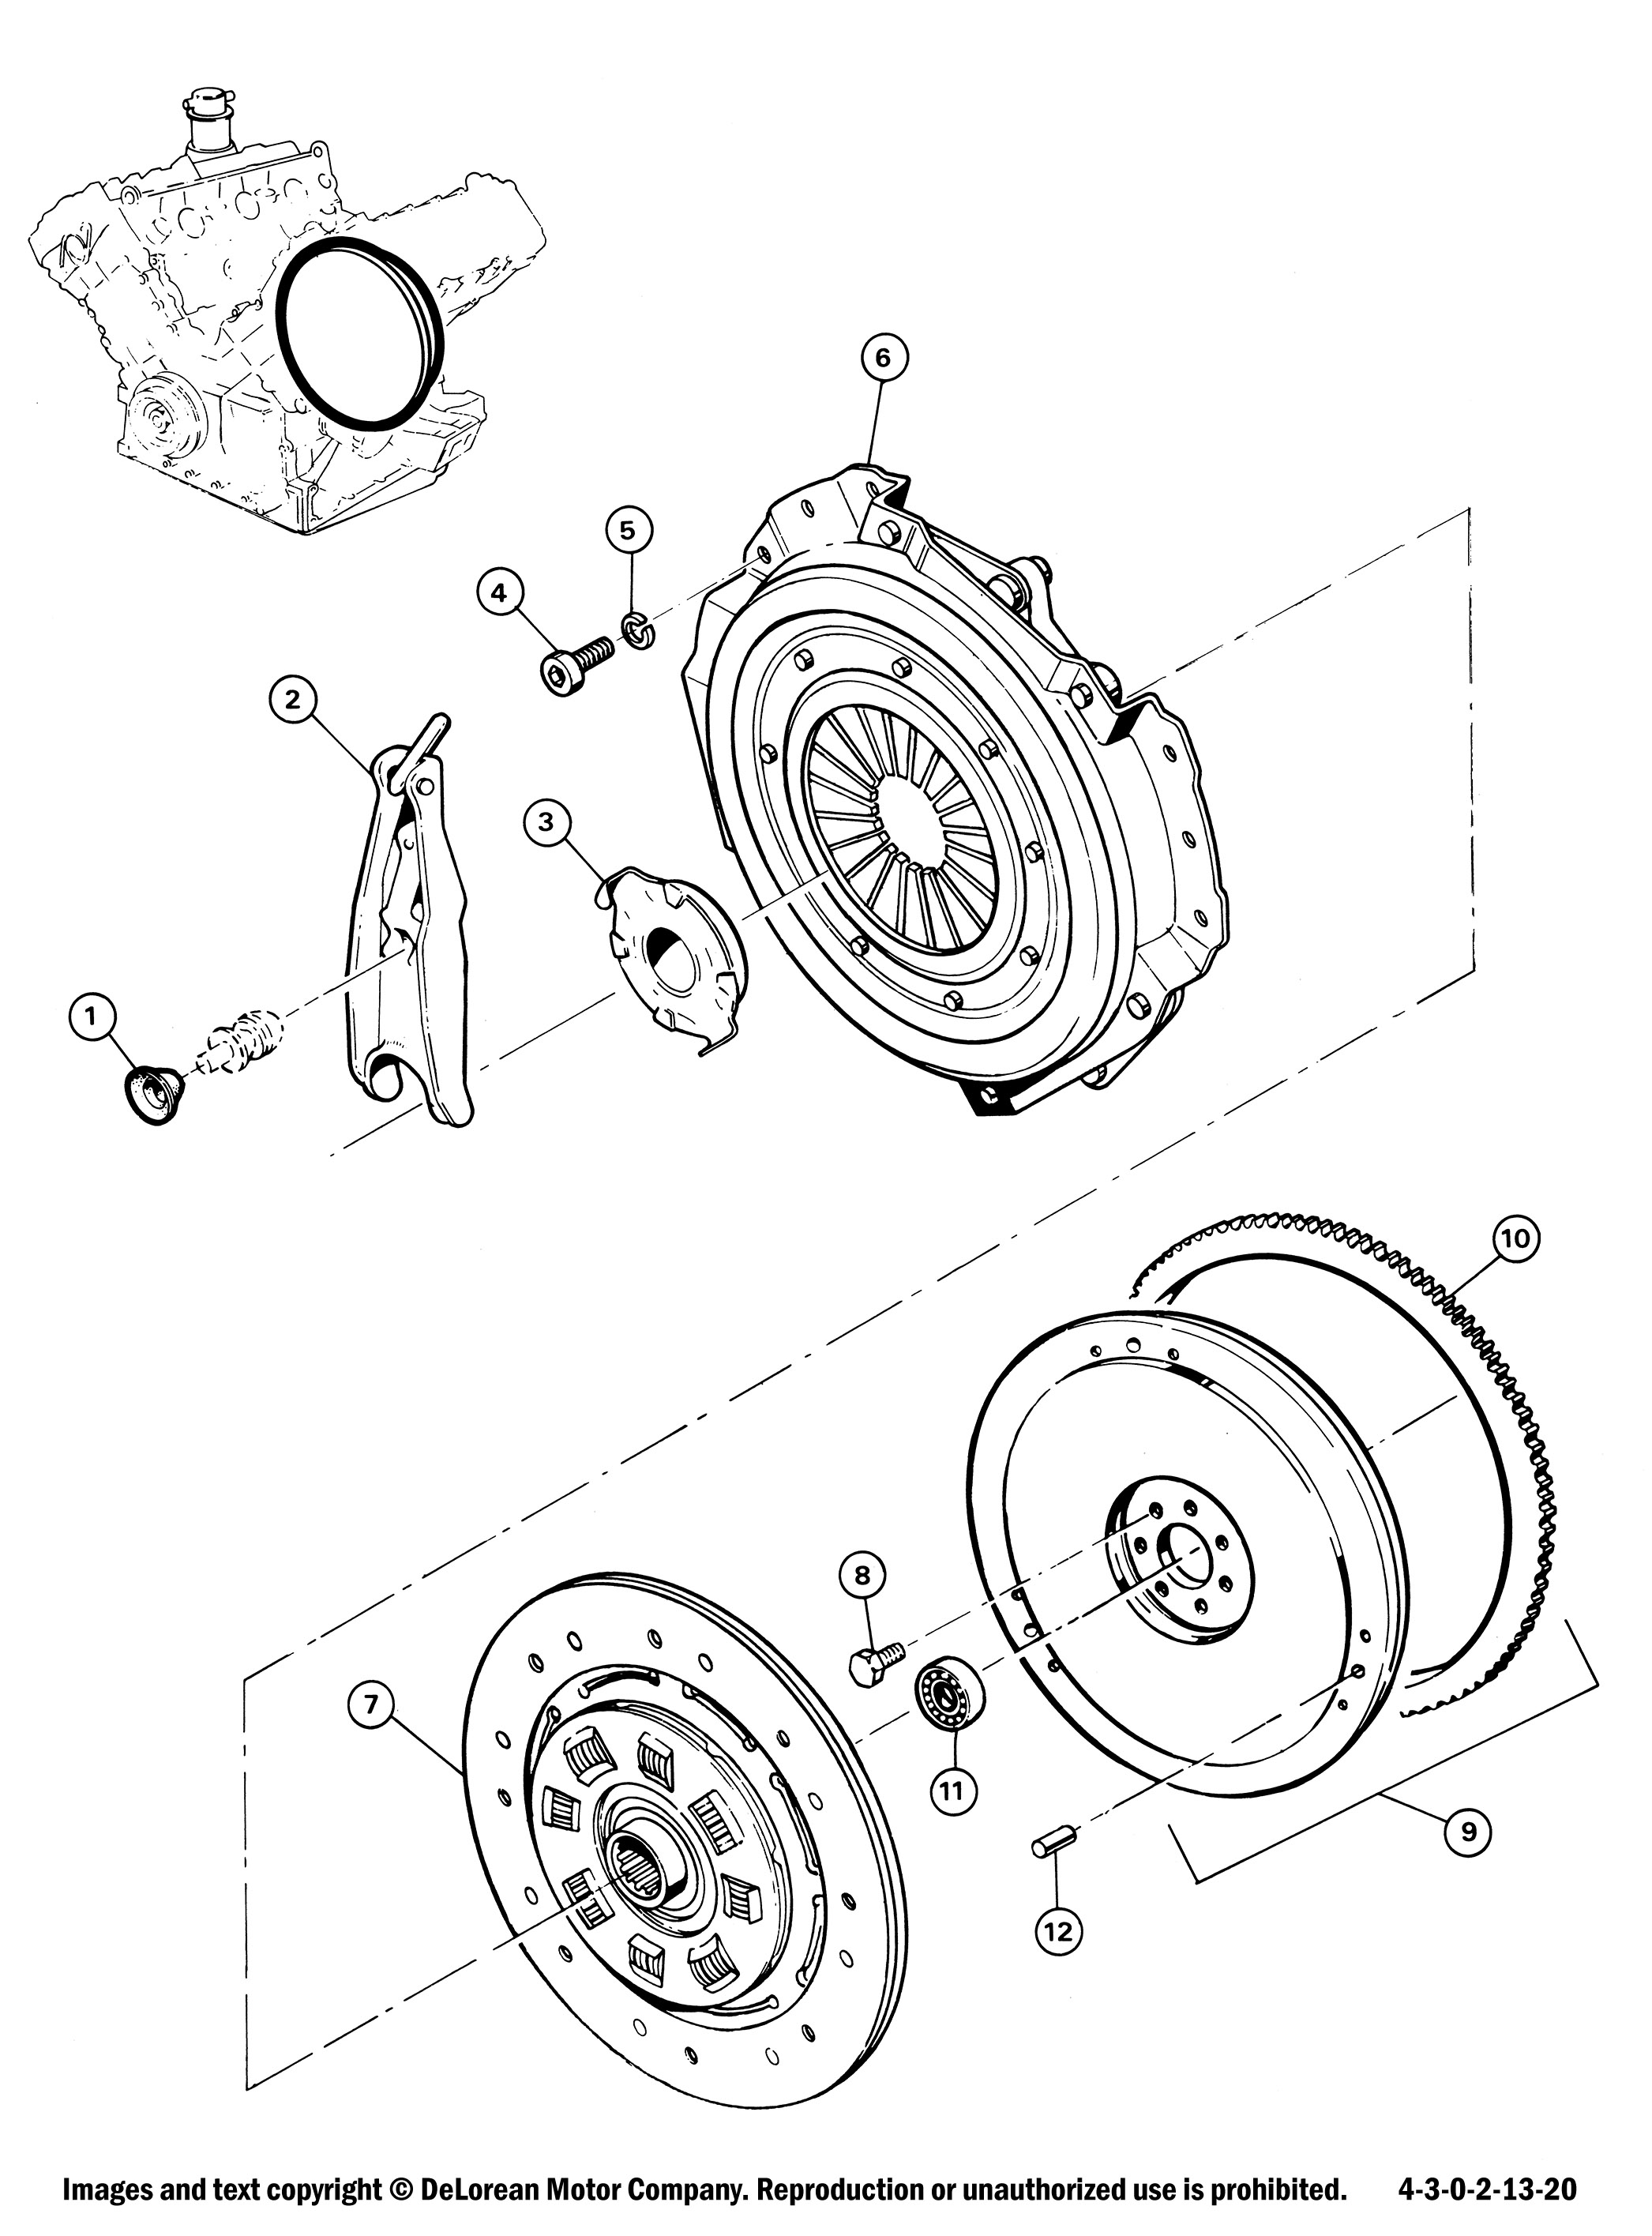 4-3-0 Flywheel/Clutch - Manual Transmission - Parts Parts, Service